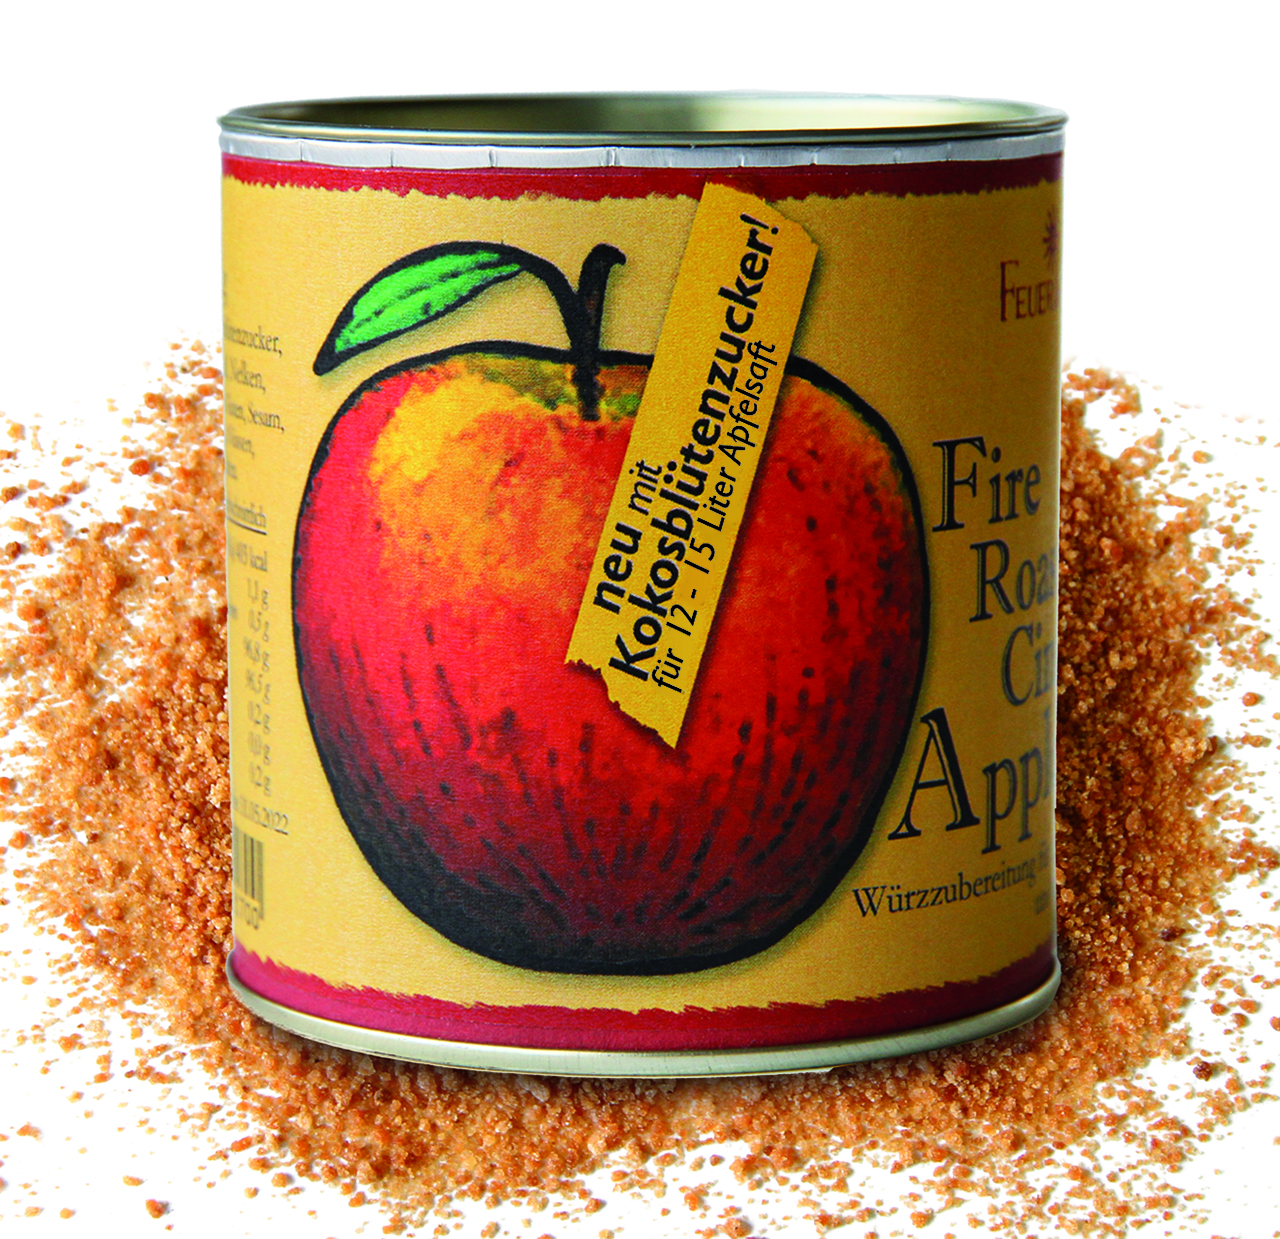 12  Stück: Das neue Bio-Fire Roasted Cinnamon Apple Spice - Apfelsaftgewürz   